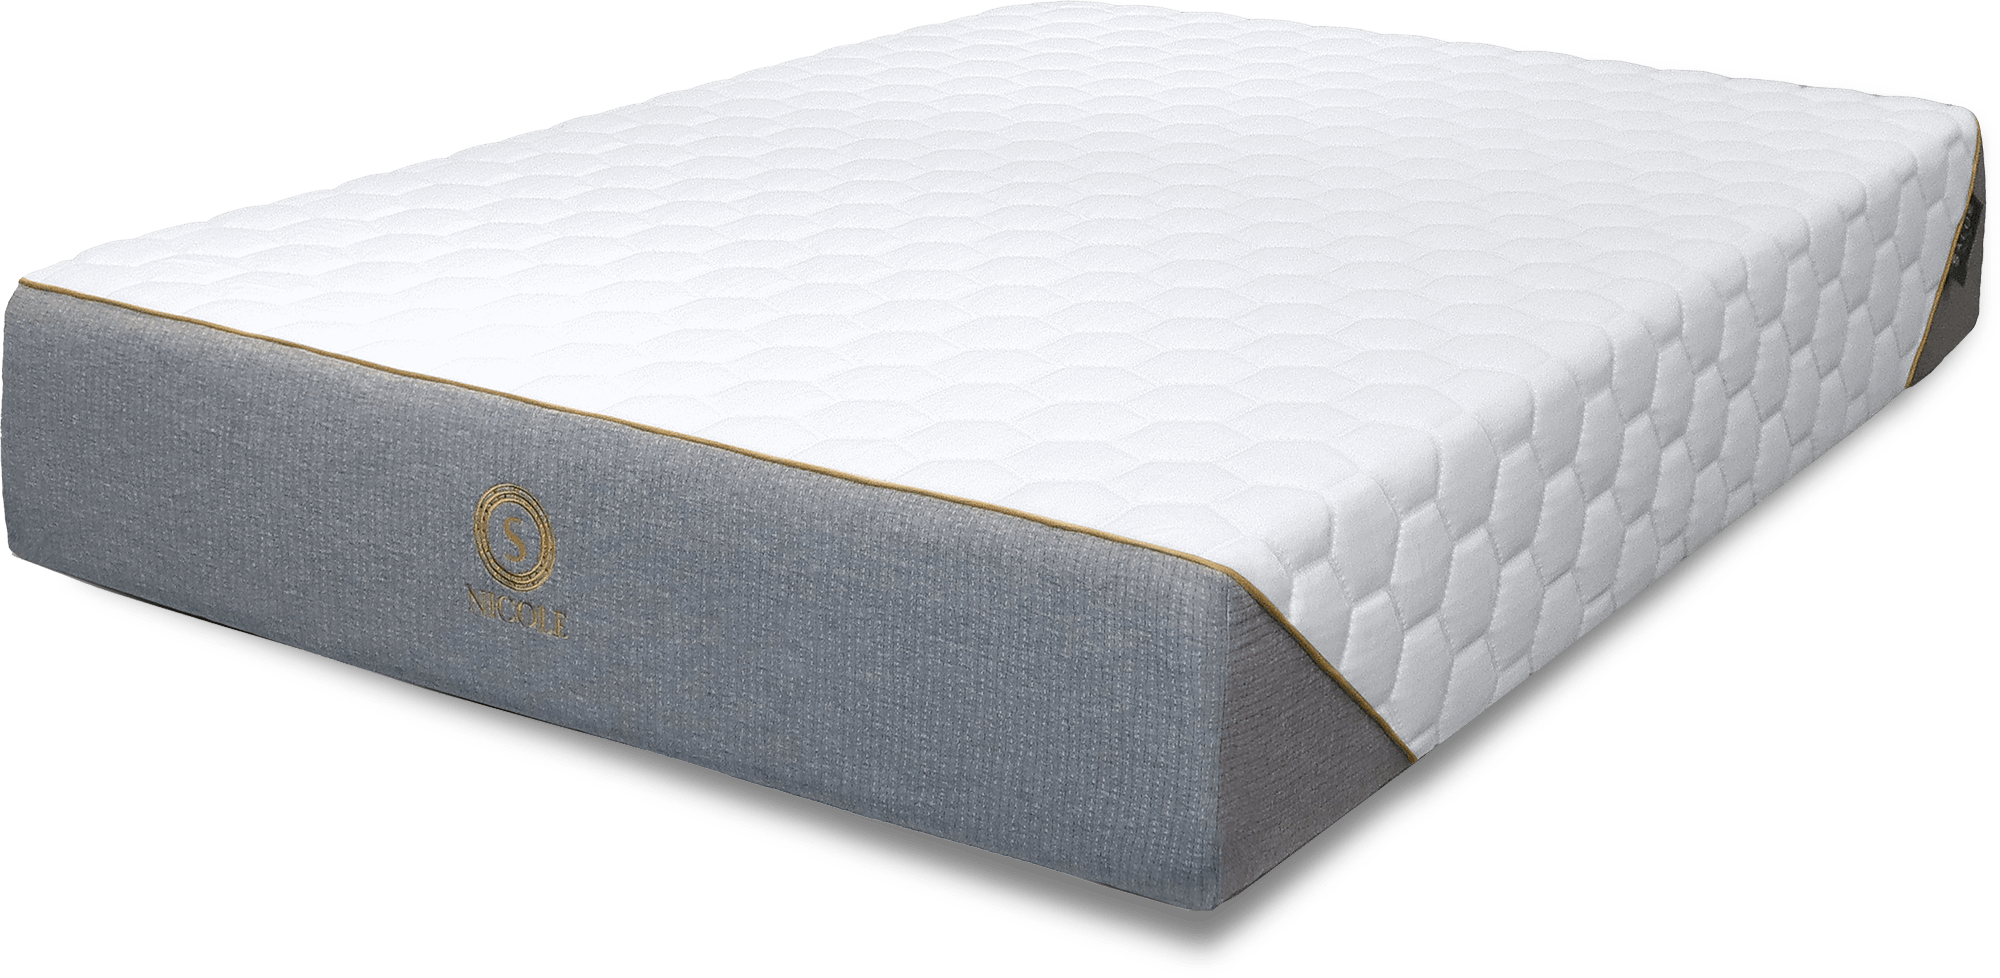 salus 2000 mattress review